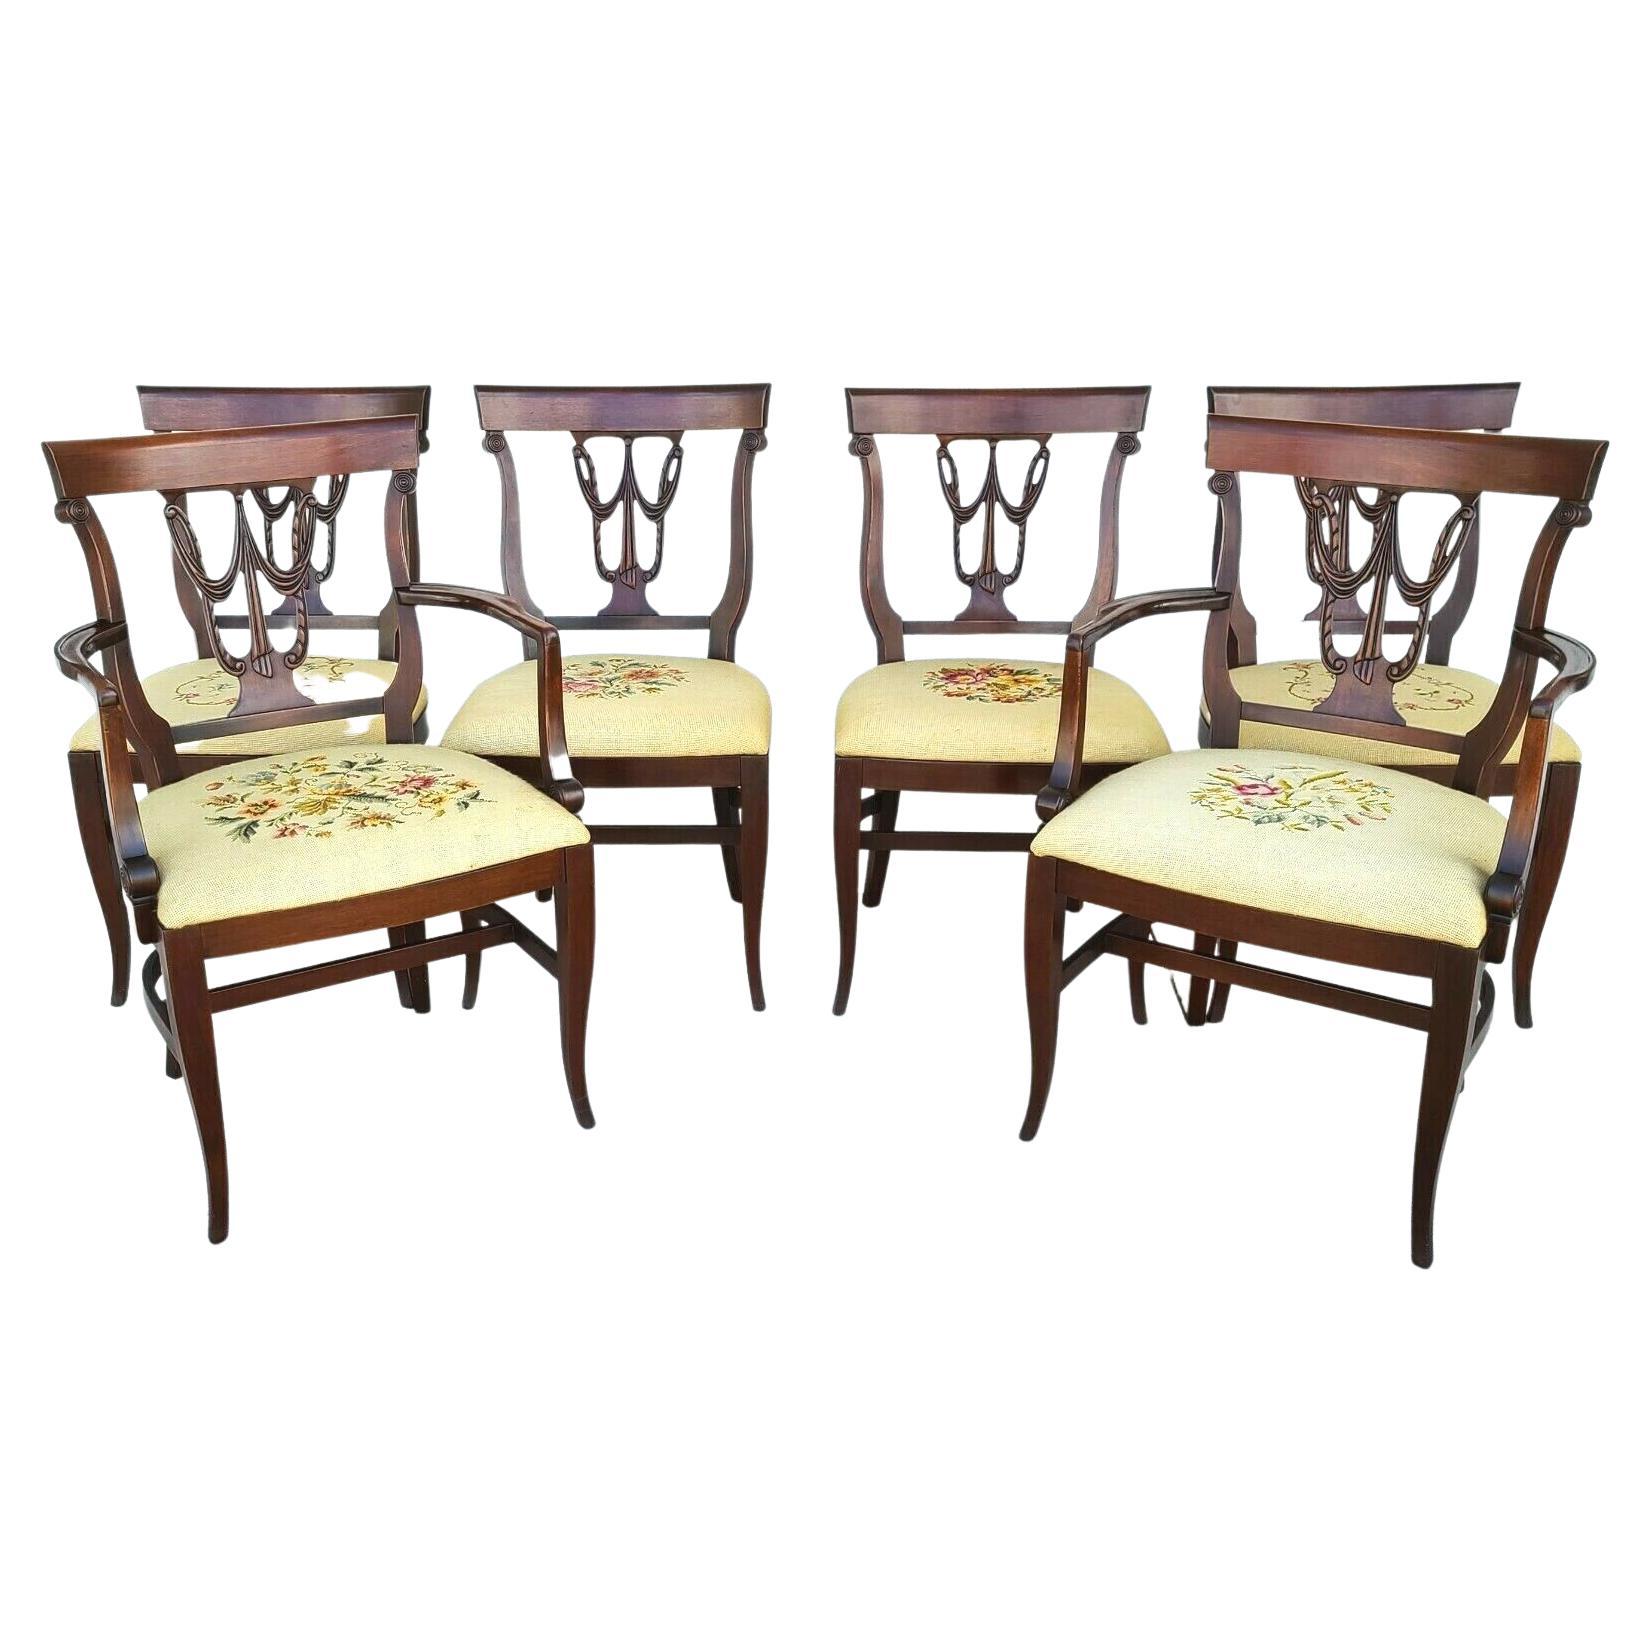 Antique 1920s Italian Regency Mahogany Dining Chairs with Needlepoint -Set of 6